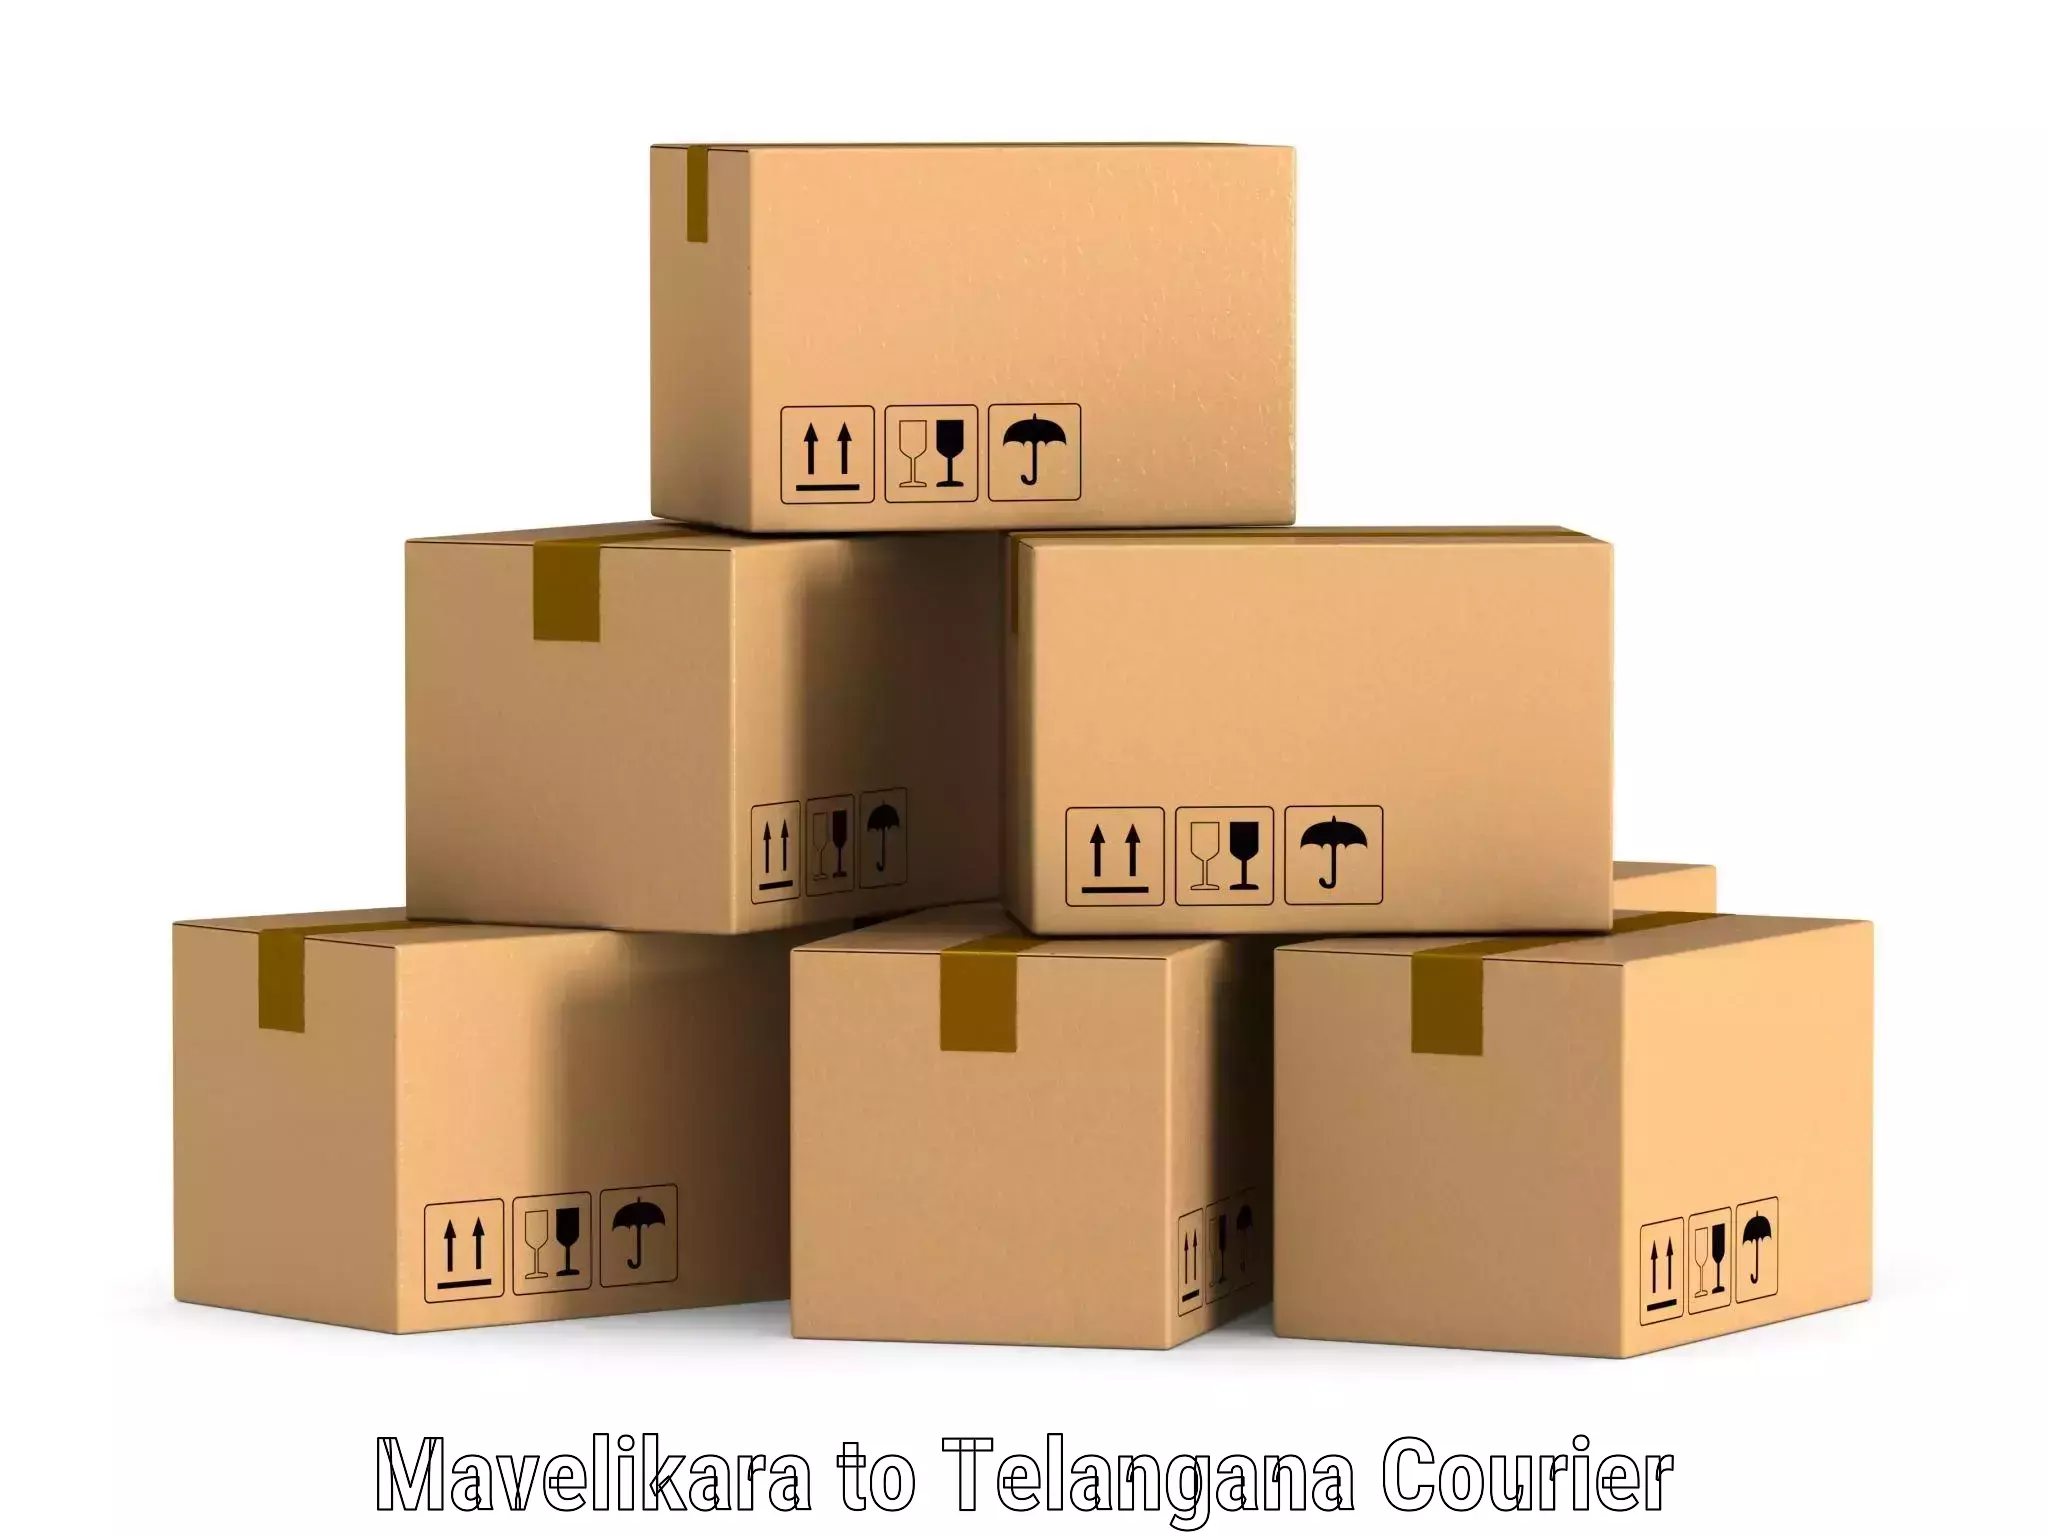 Express courier facilities in Mavelikara to Rudrangi